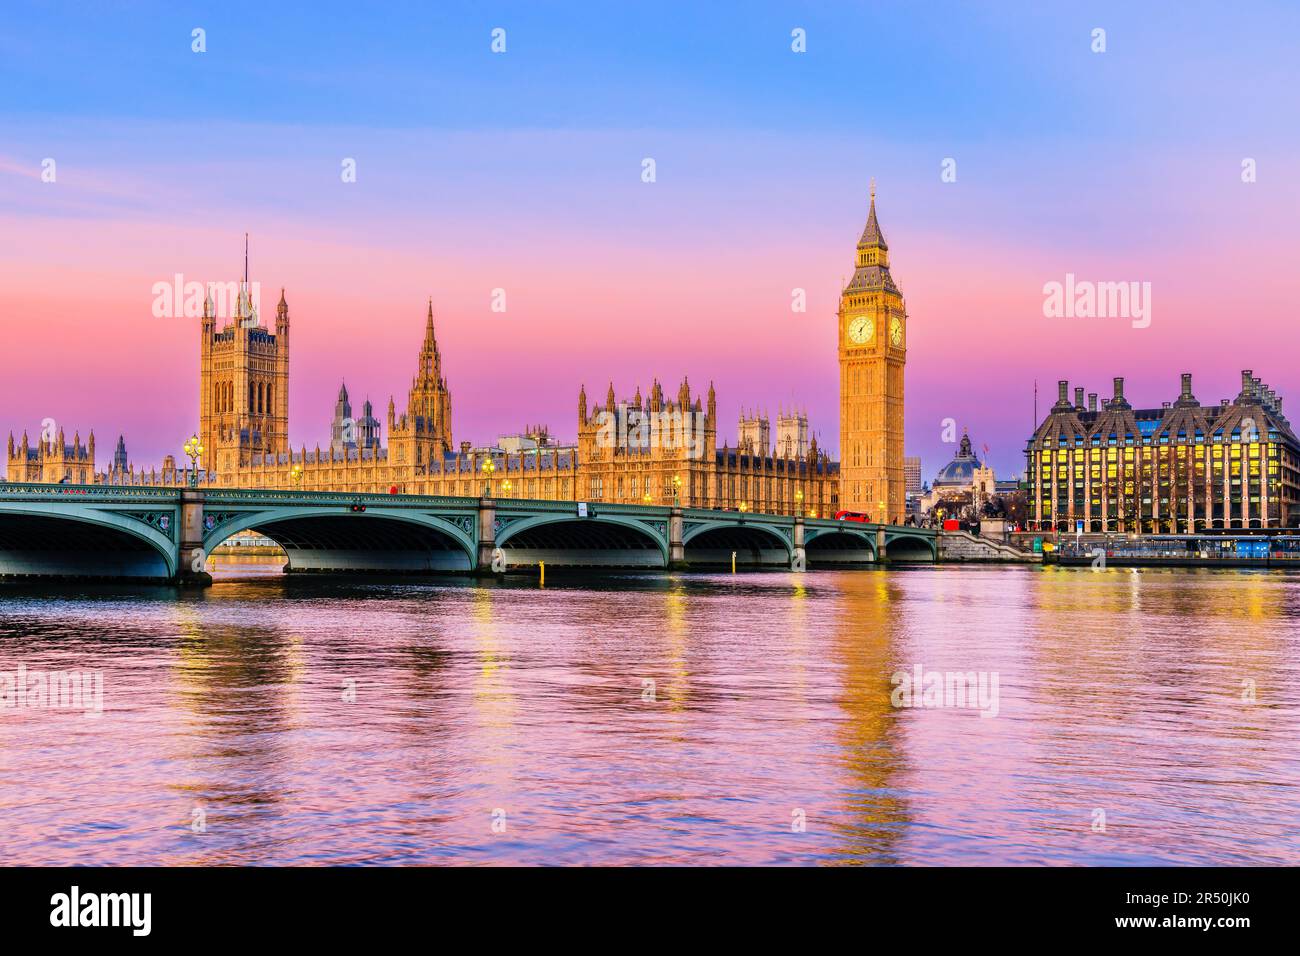 London, United Kingdom. The Palace of Westminster, Big Ben, and Westminster Bridge at sunrise. Stock Photo